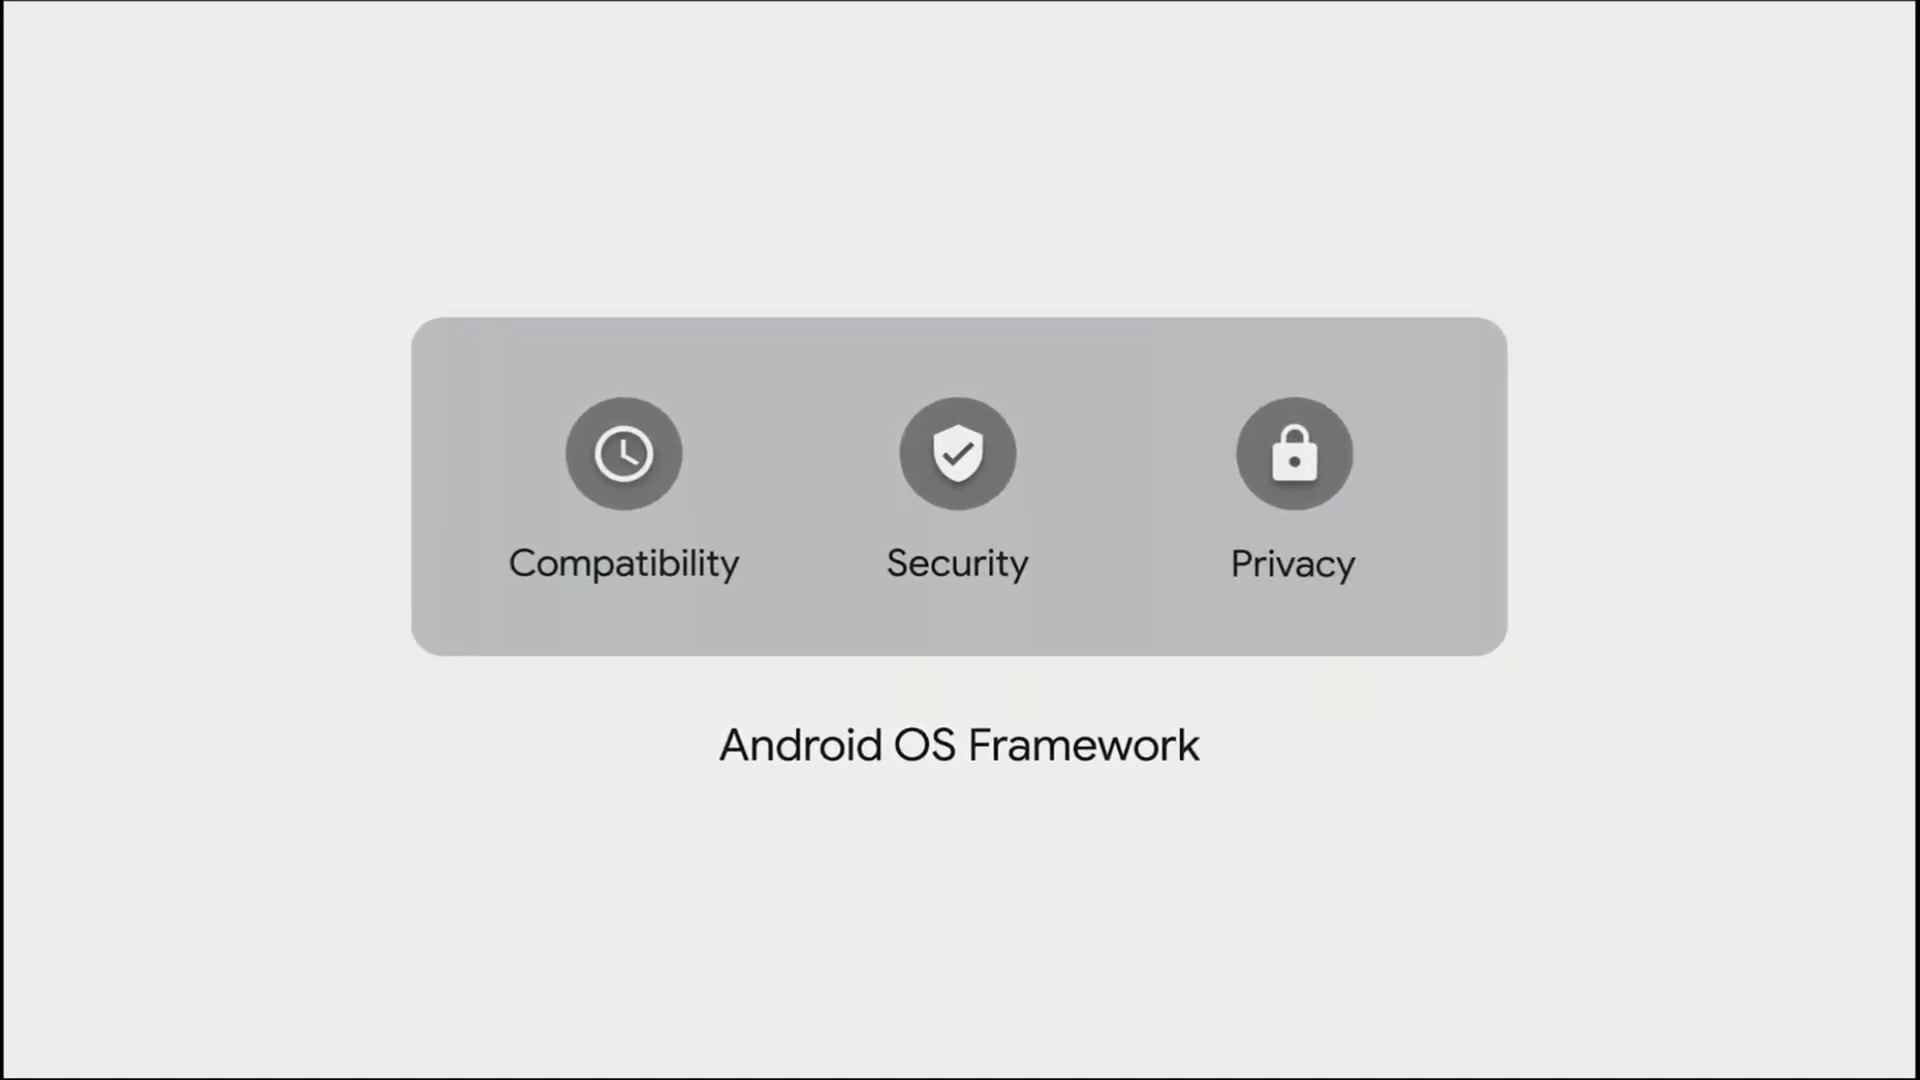 security framework